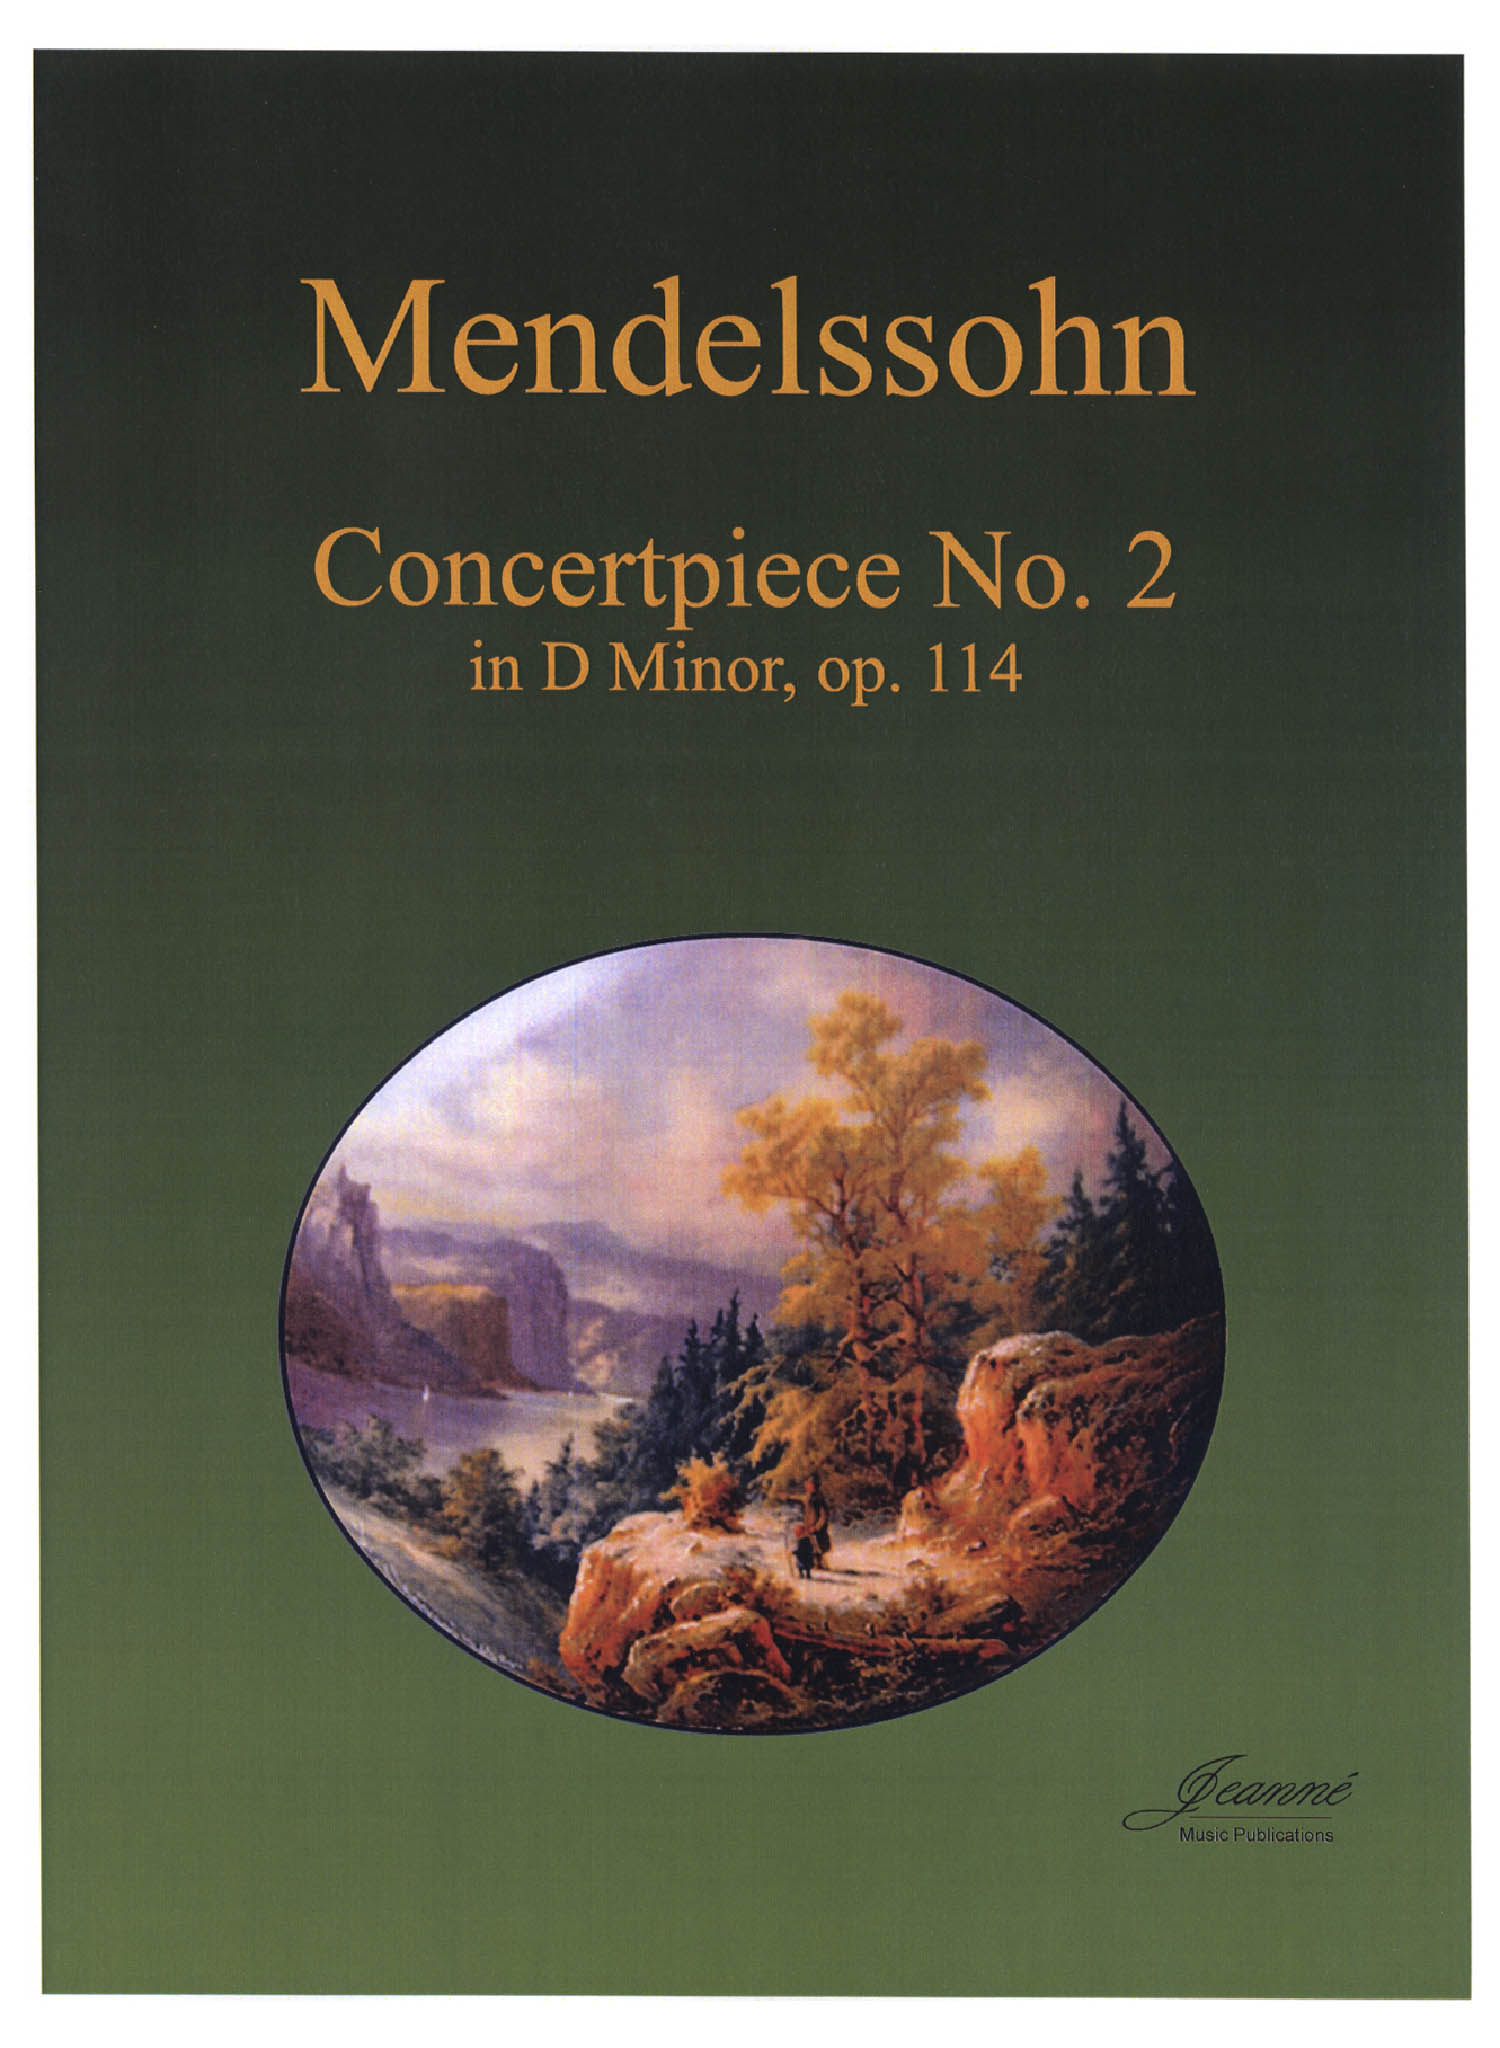 Mendelssohn No. 2 in D Minor, Op. 114 Cover